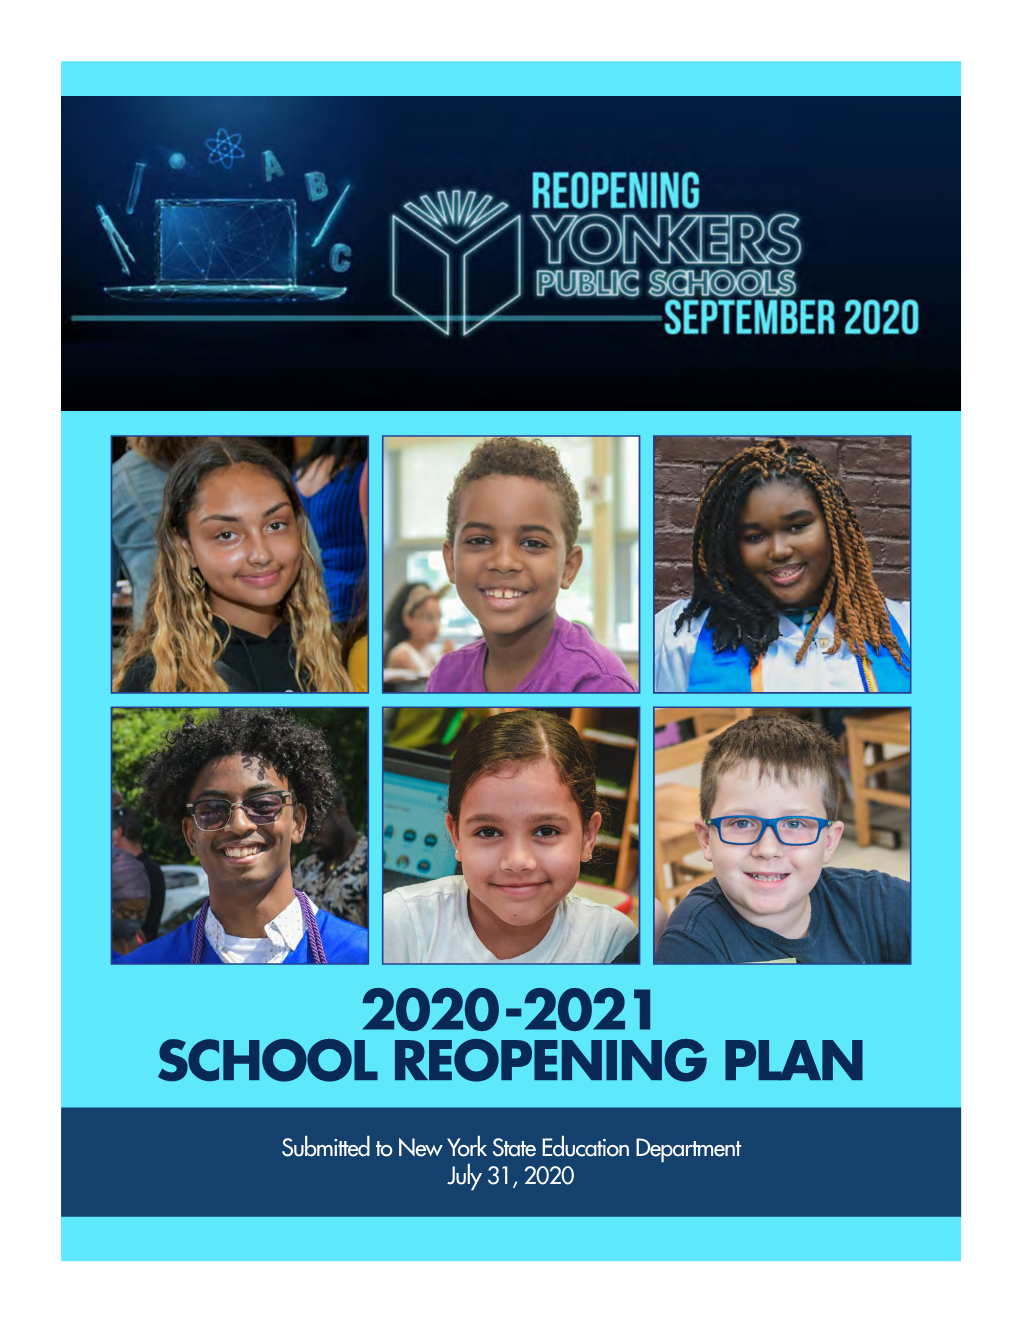 Yonkers Public Schools 2020-2021 School Reopening Plan